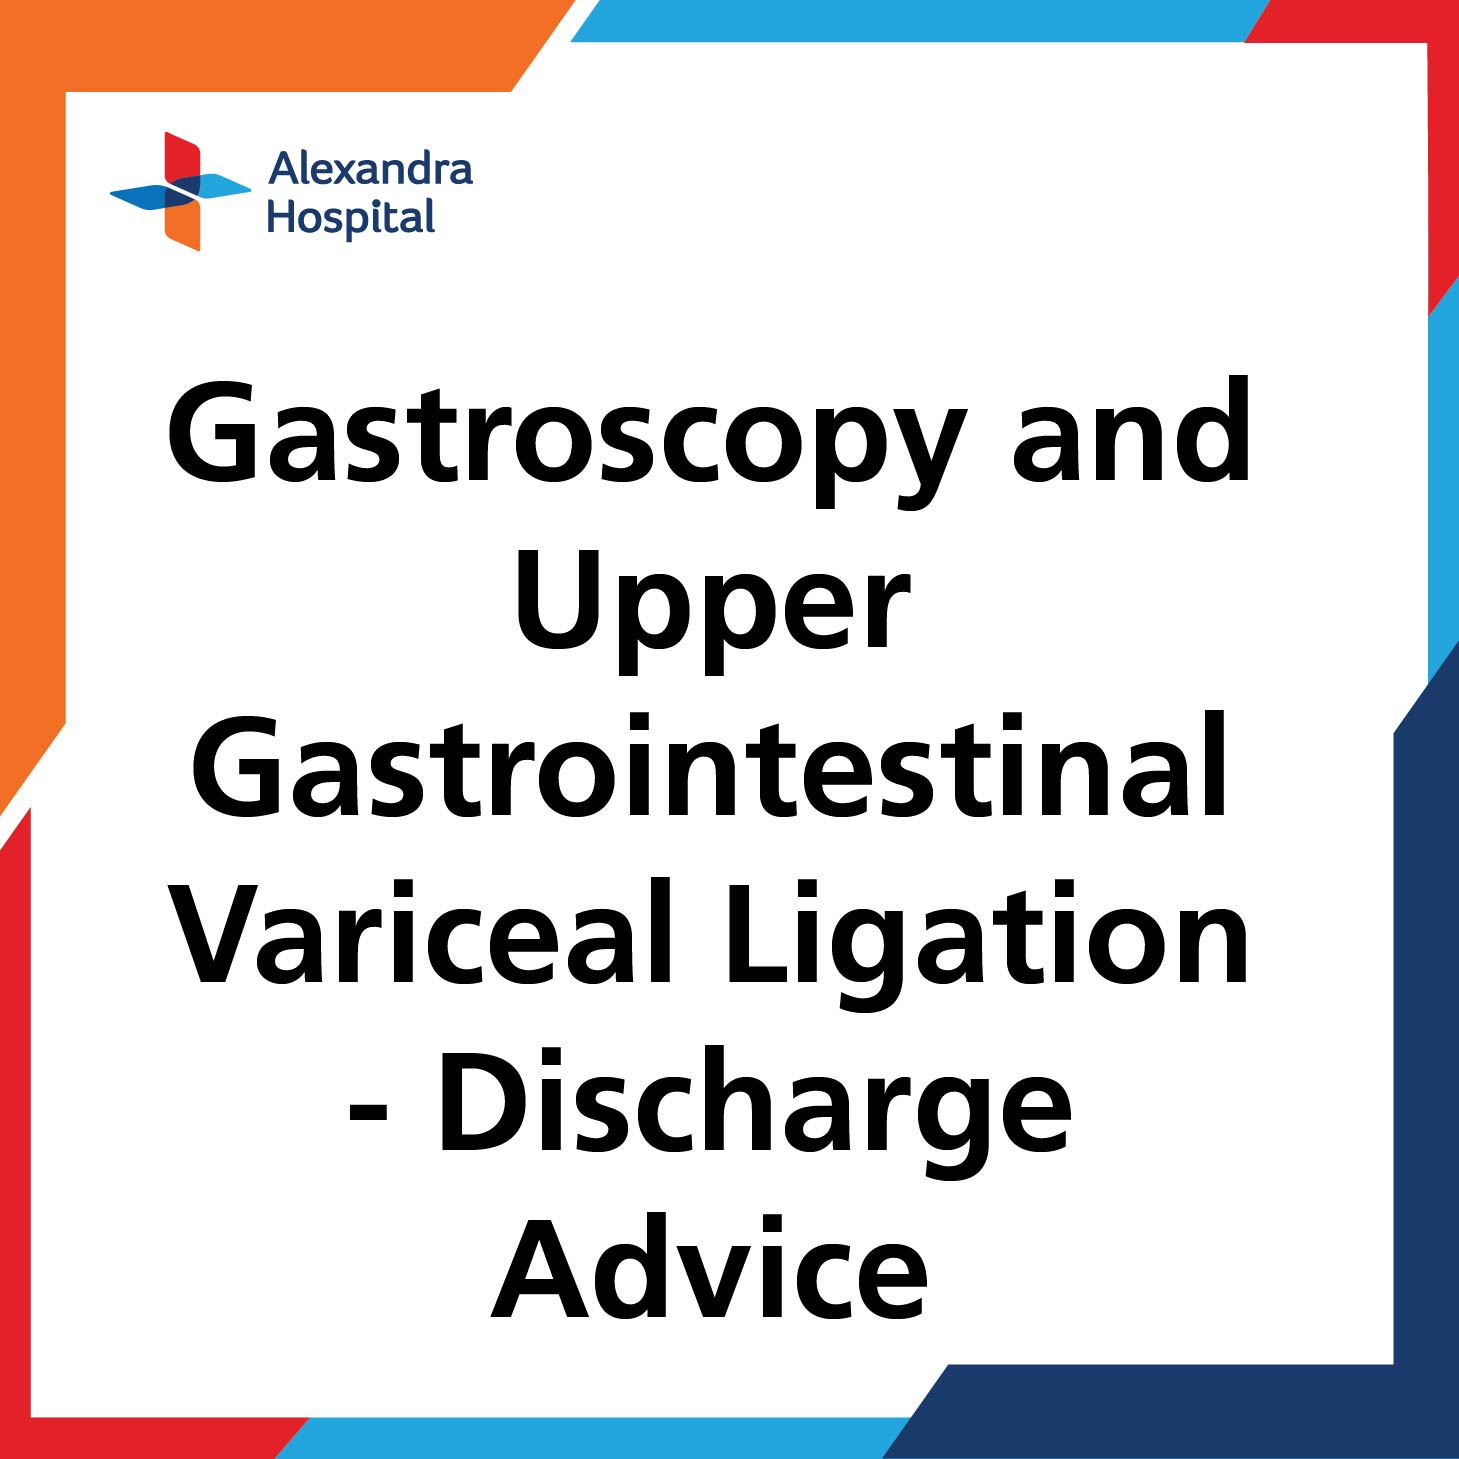 ENDO Gastroscopy and Upper Gastrointestinal Variceal Ligation Discharge Advice